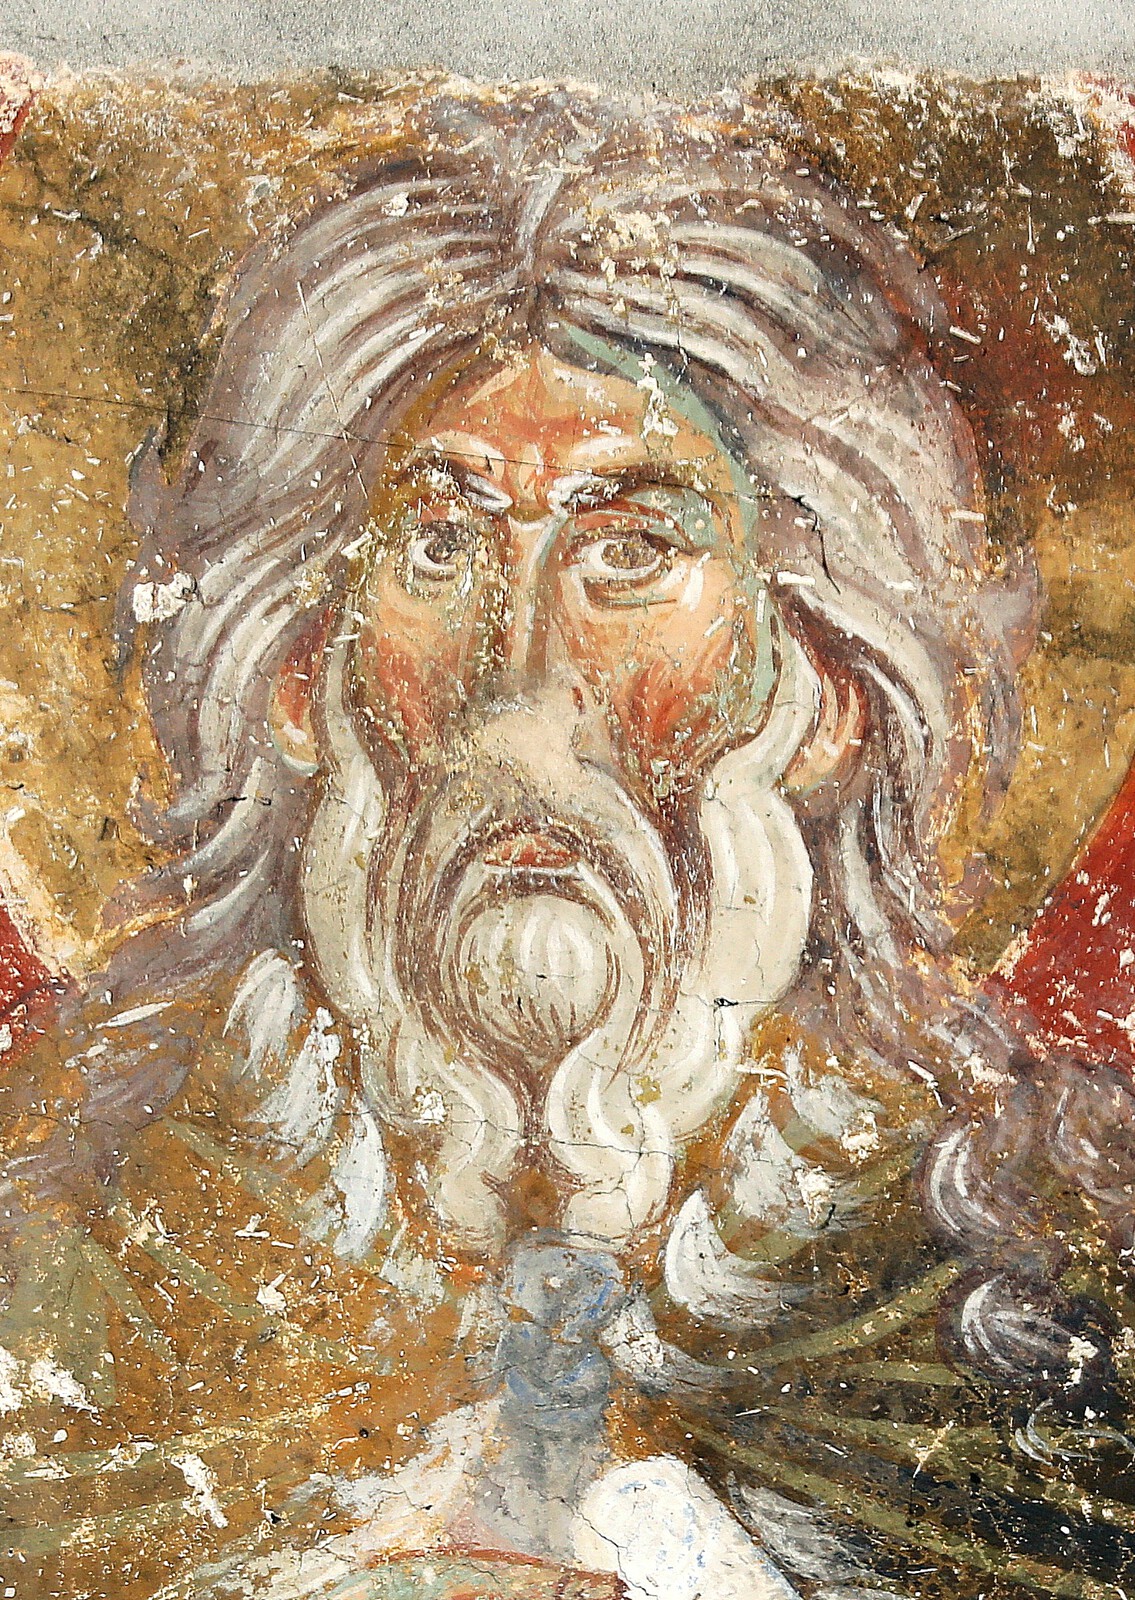 Prophet Elijah, detail